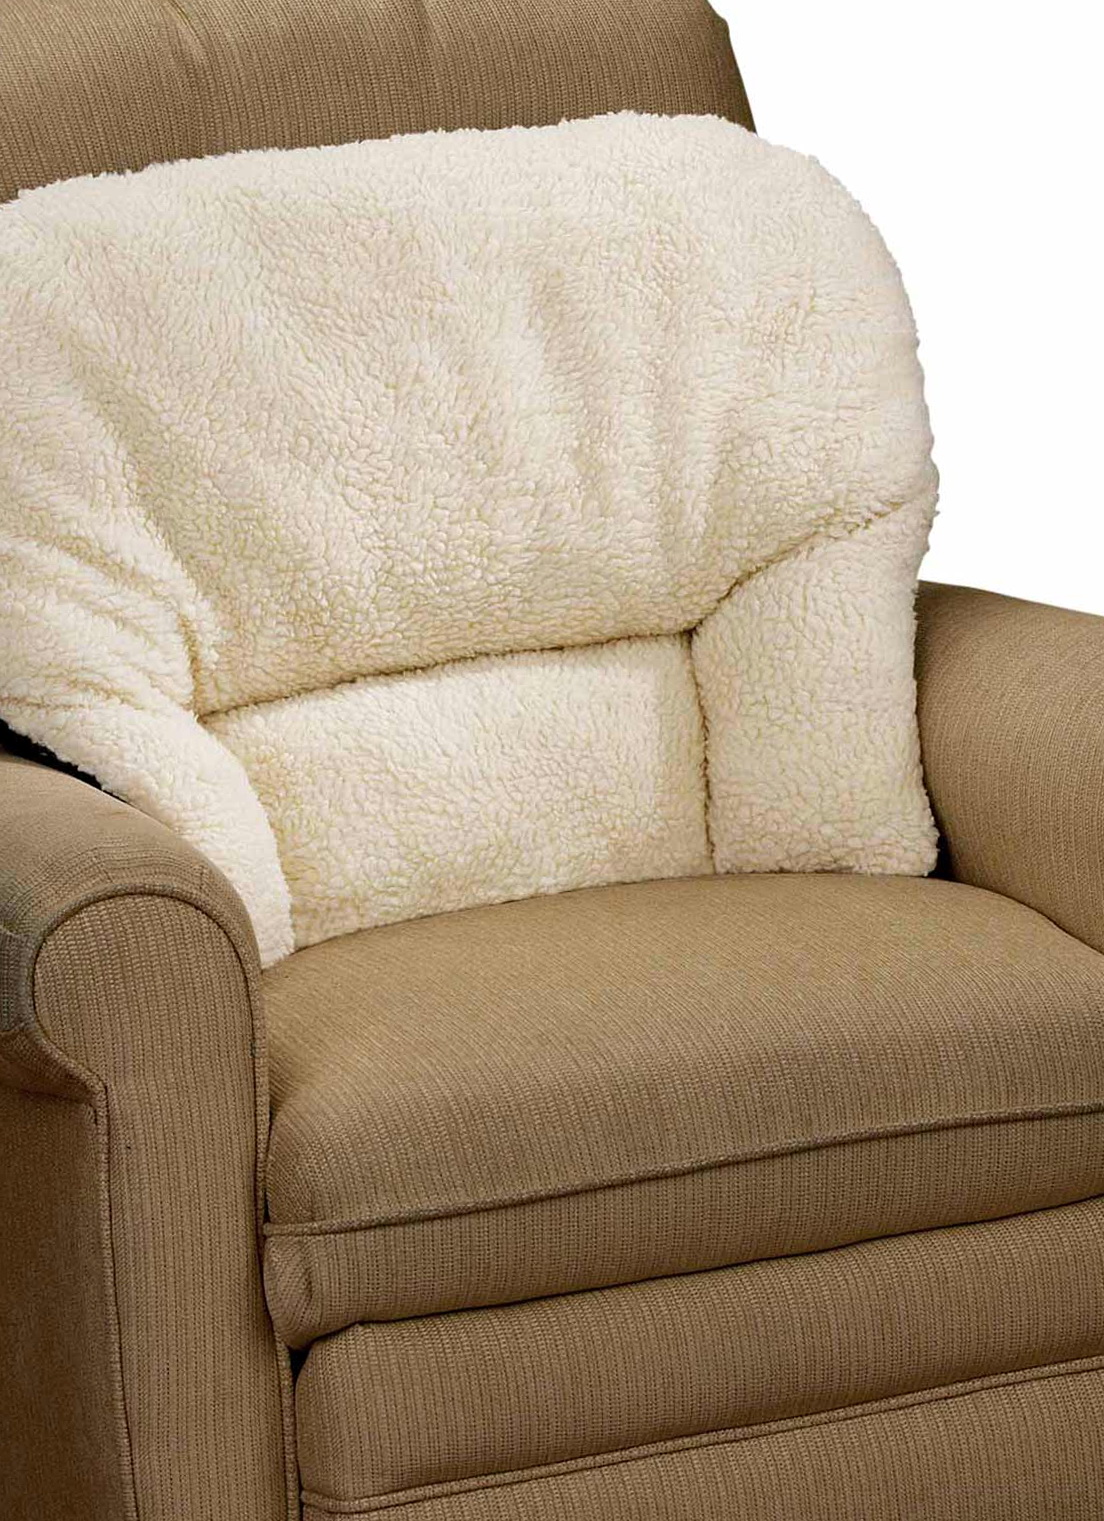 Lumbar Support Pillow Seat Cushion Memory Foam Back Cushion Balanced Firmness Designed for